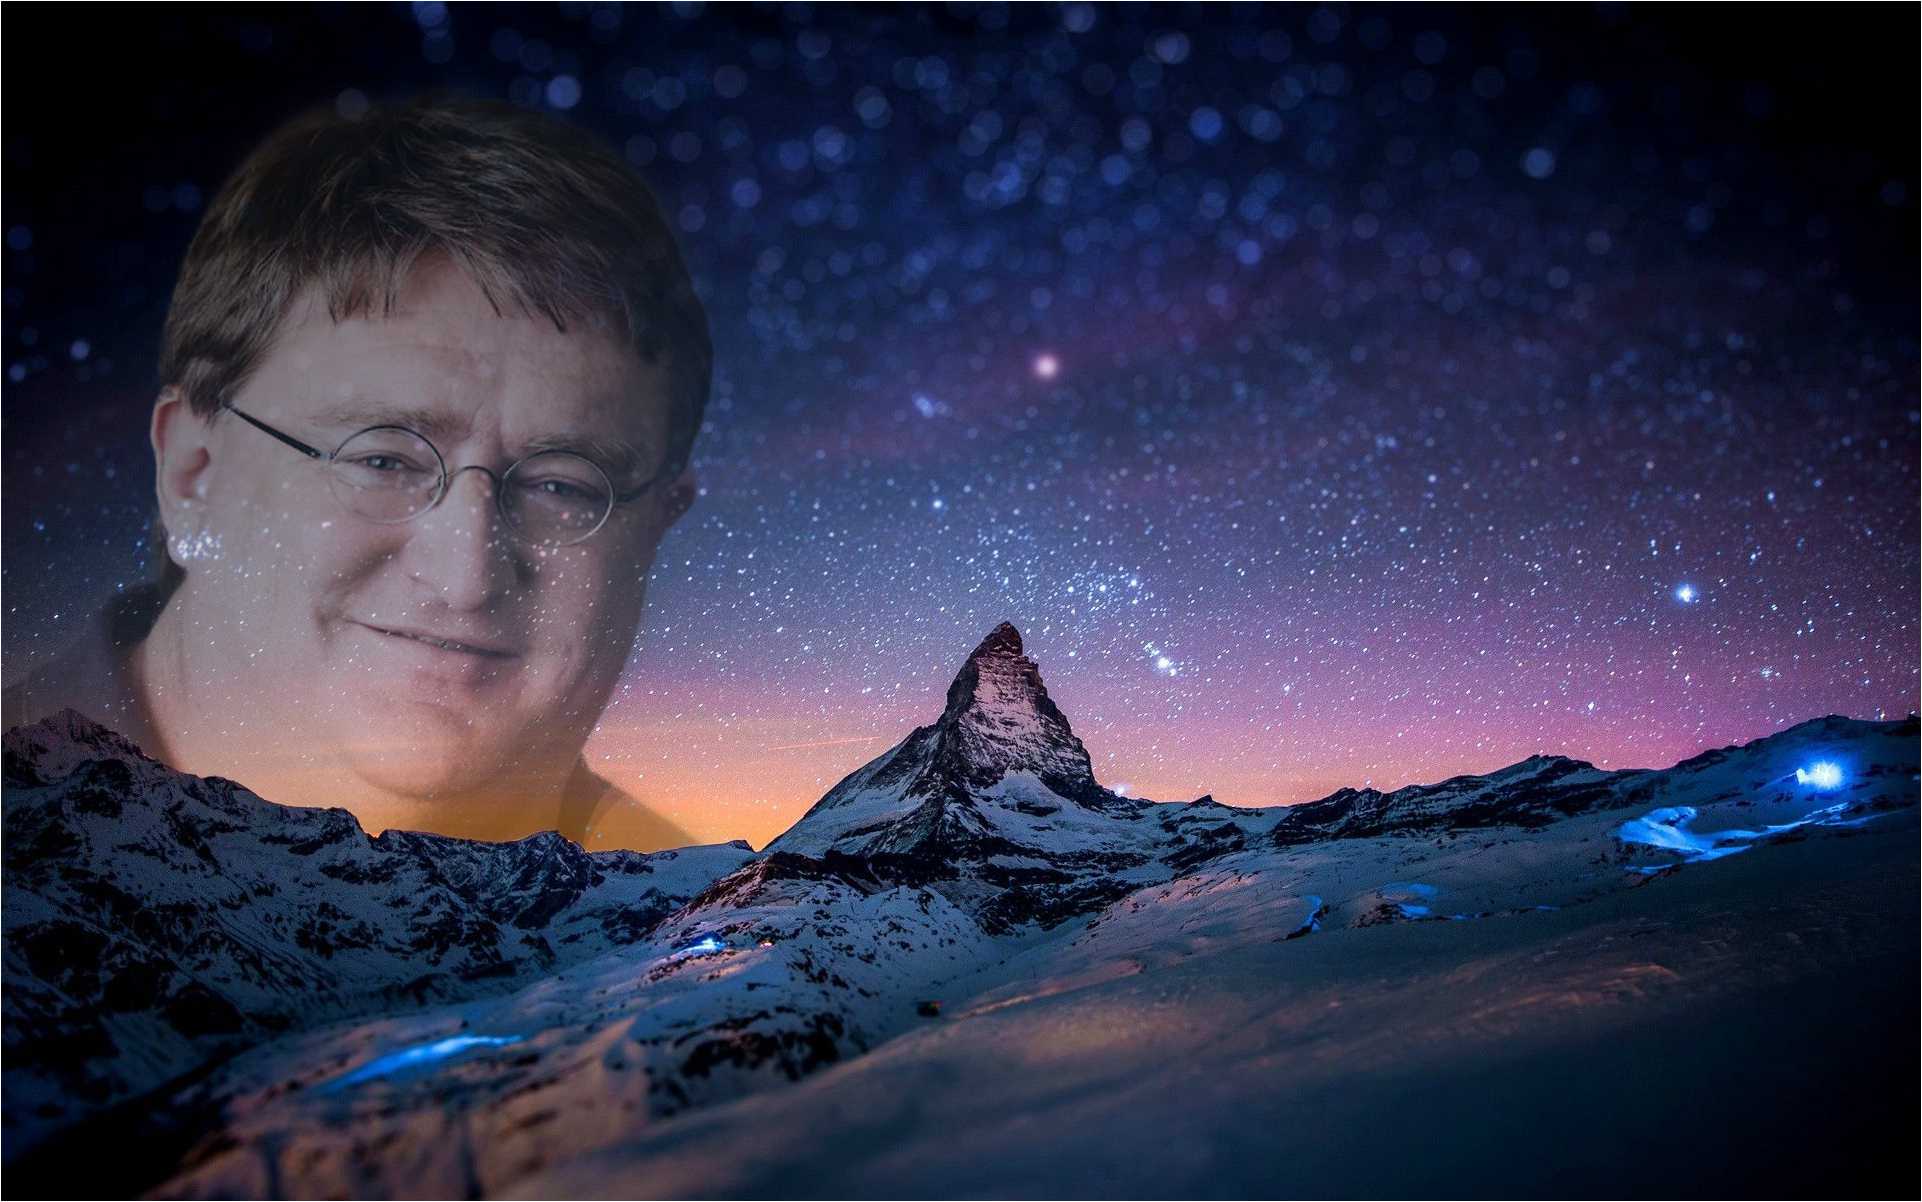 V.23: Gabe Newell Wallpaper, HD Image of Gabe Newell, Ultra HD 4K